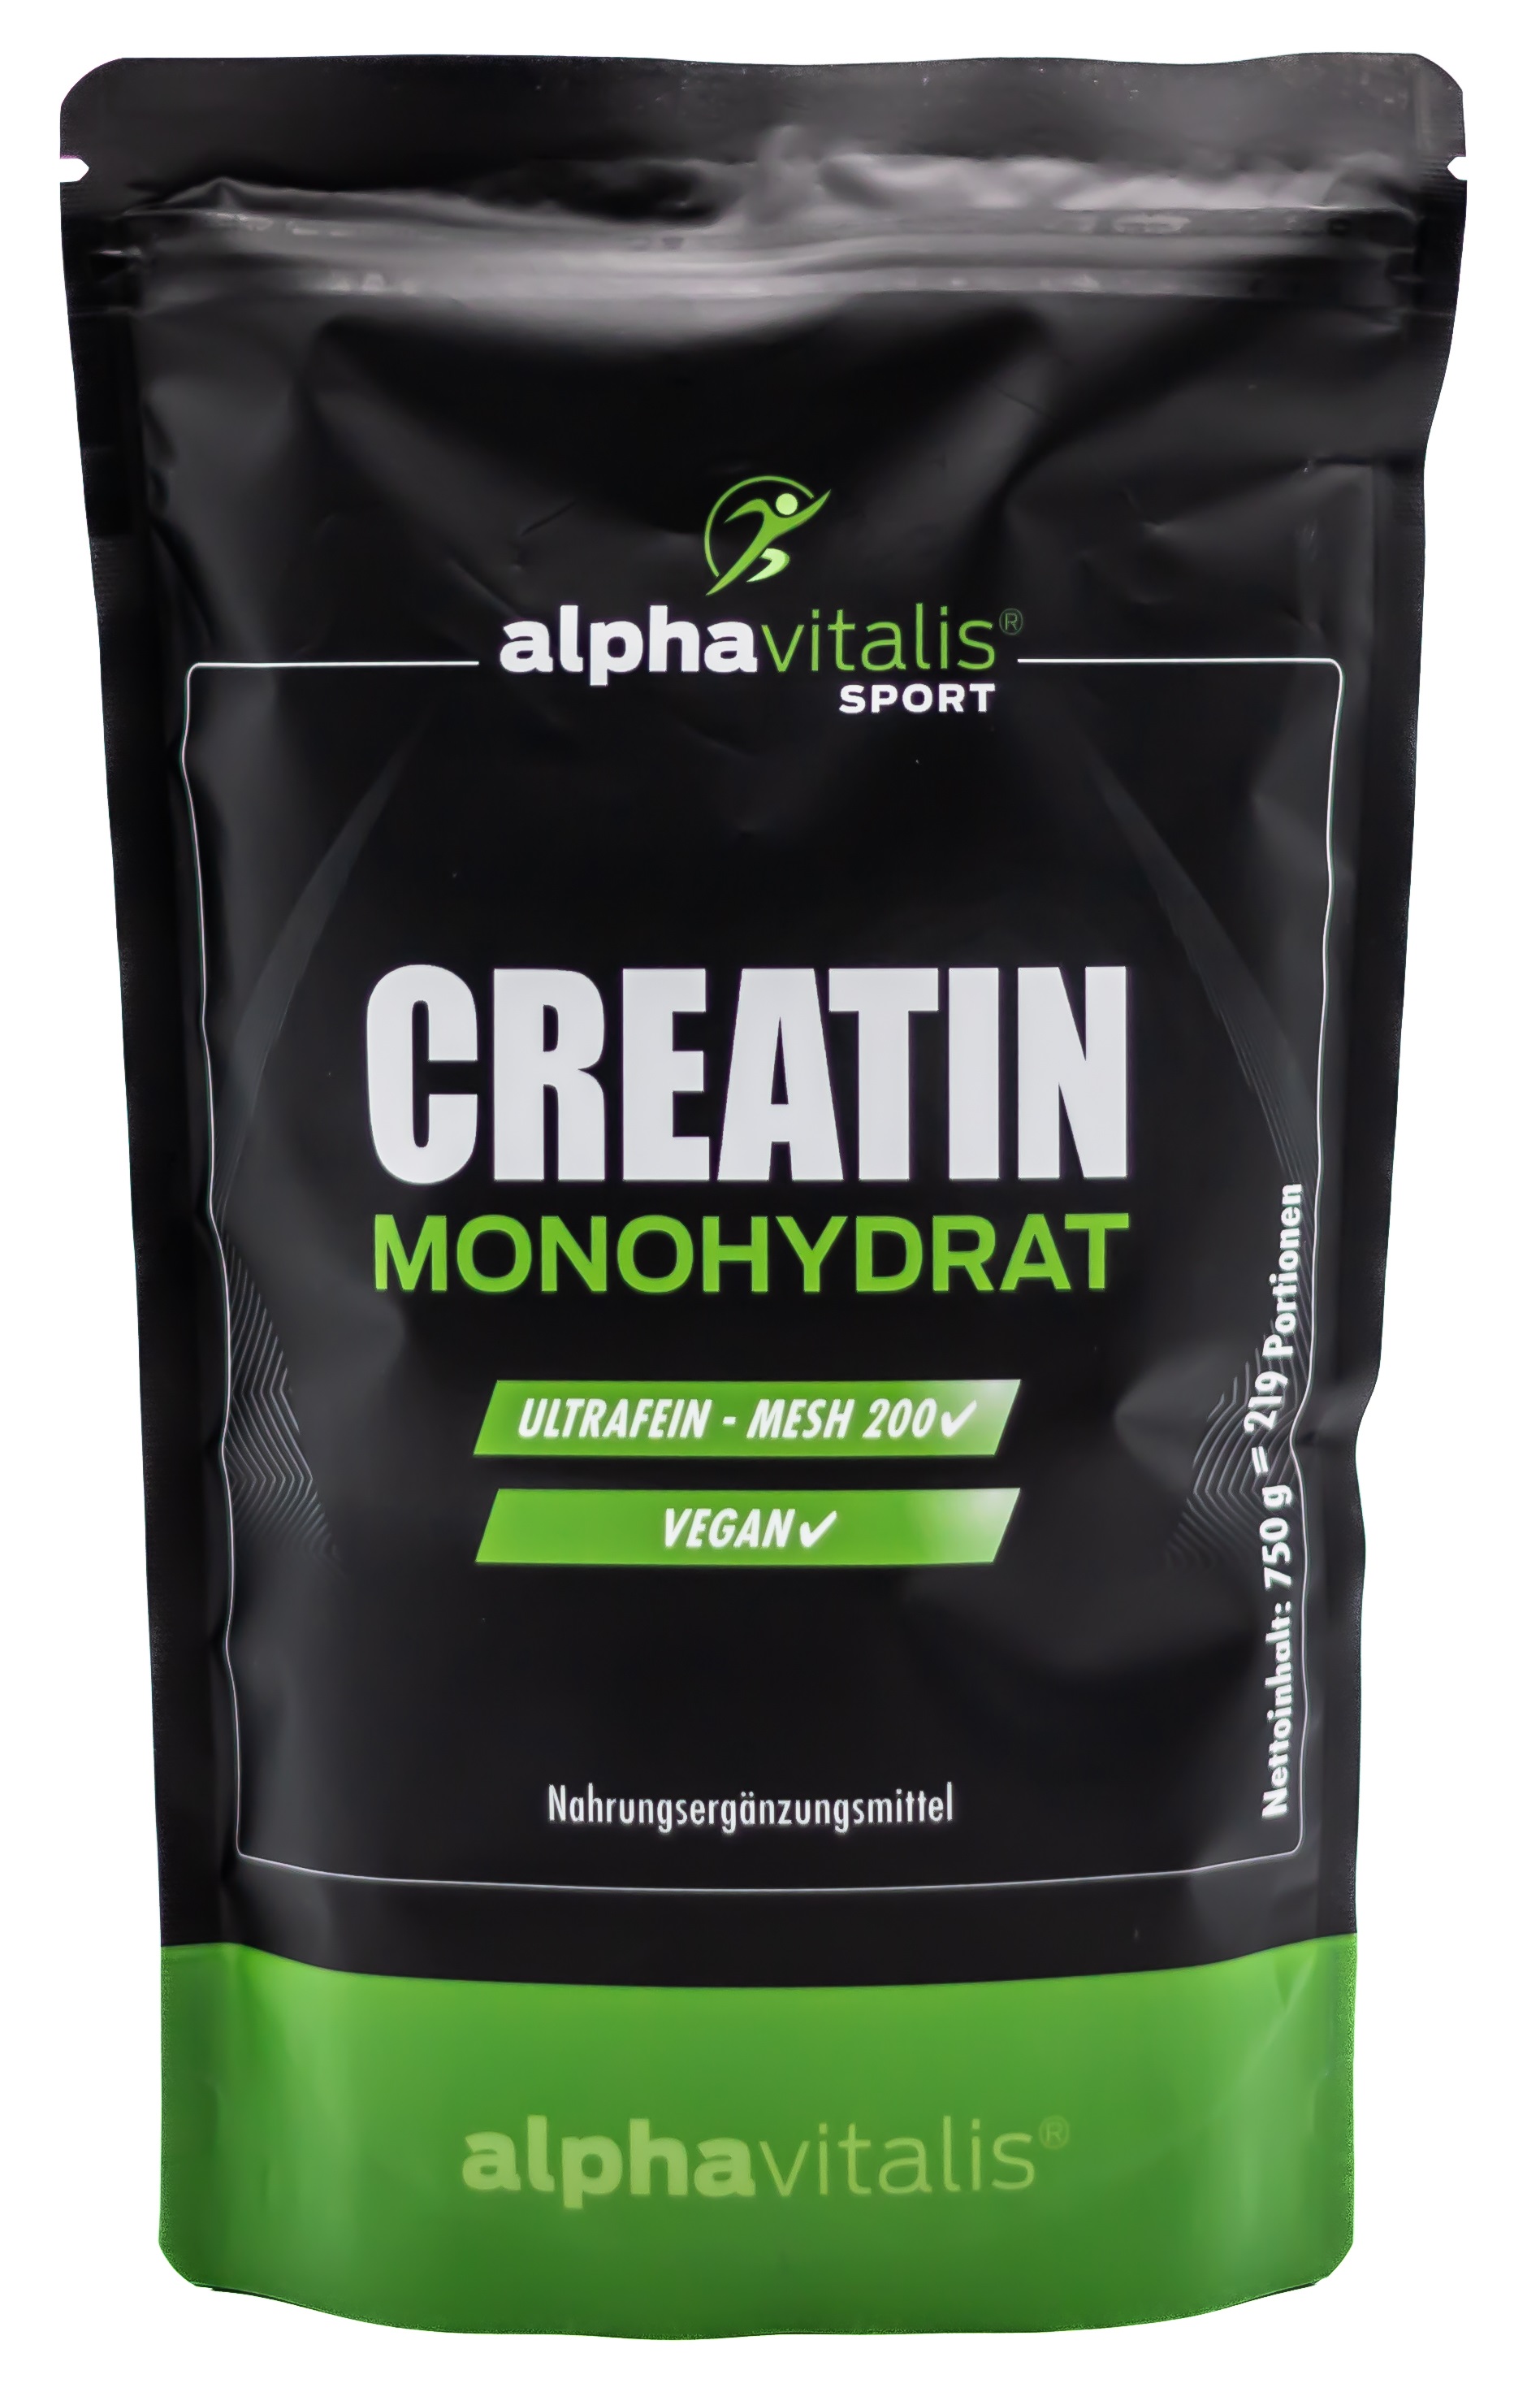 Alphavitalis Creatin Monohydrat | ultrafeine Mesh 200 Qualität | mit Vitamin B12